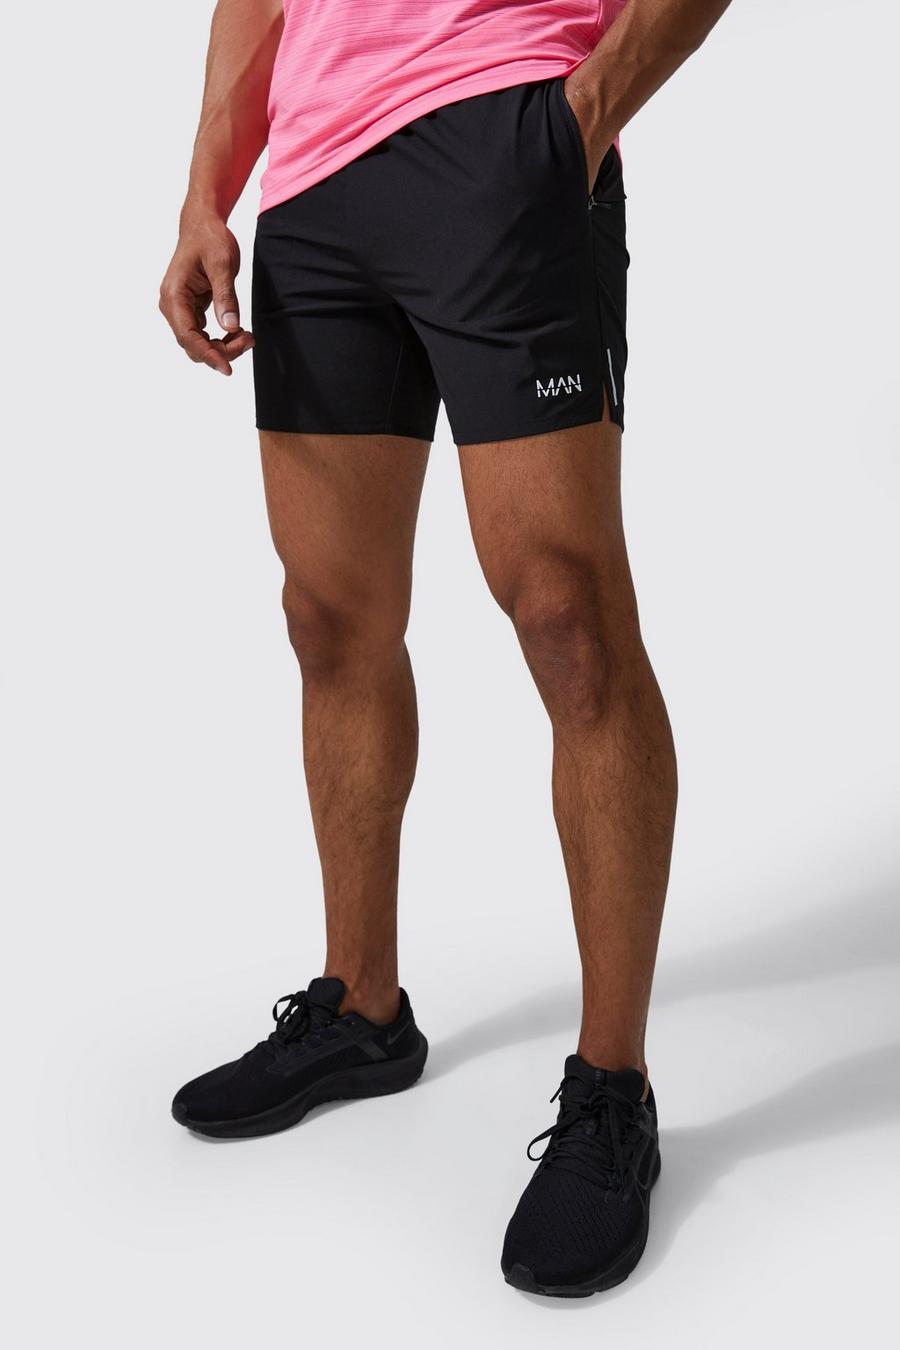 Man Active Lightweight Performance Shorts, Black